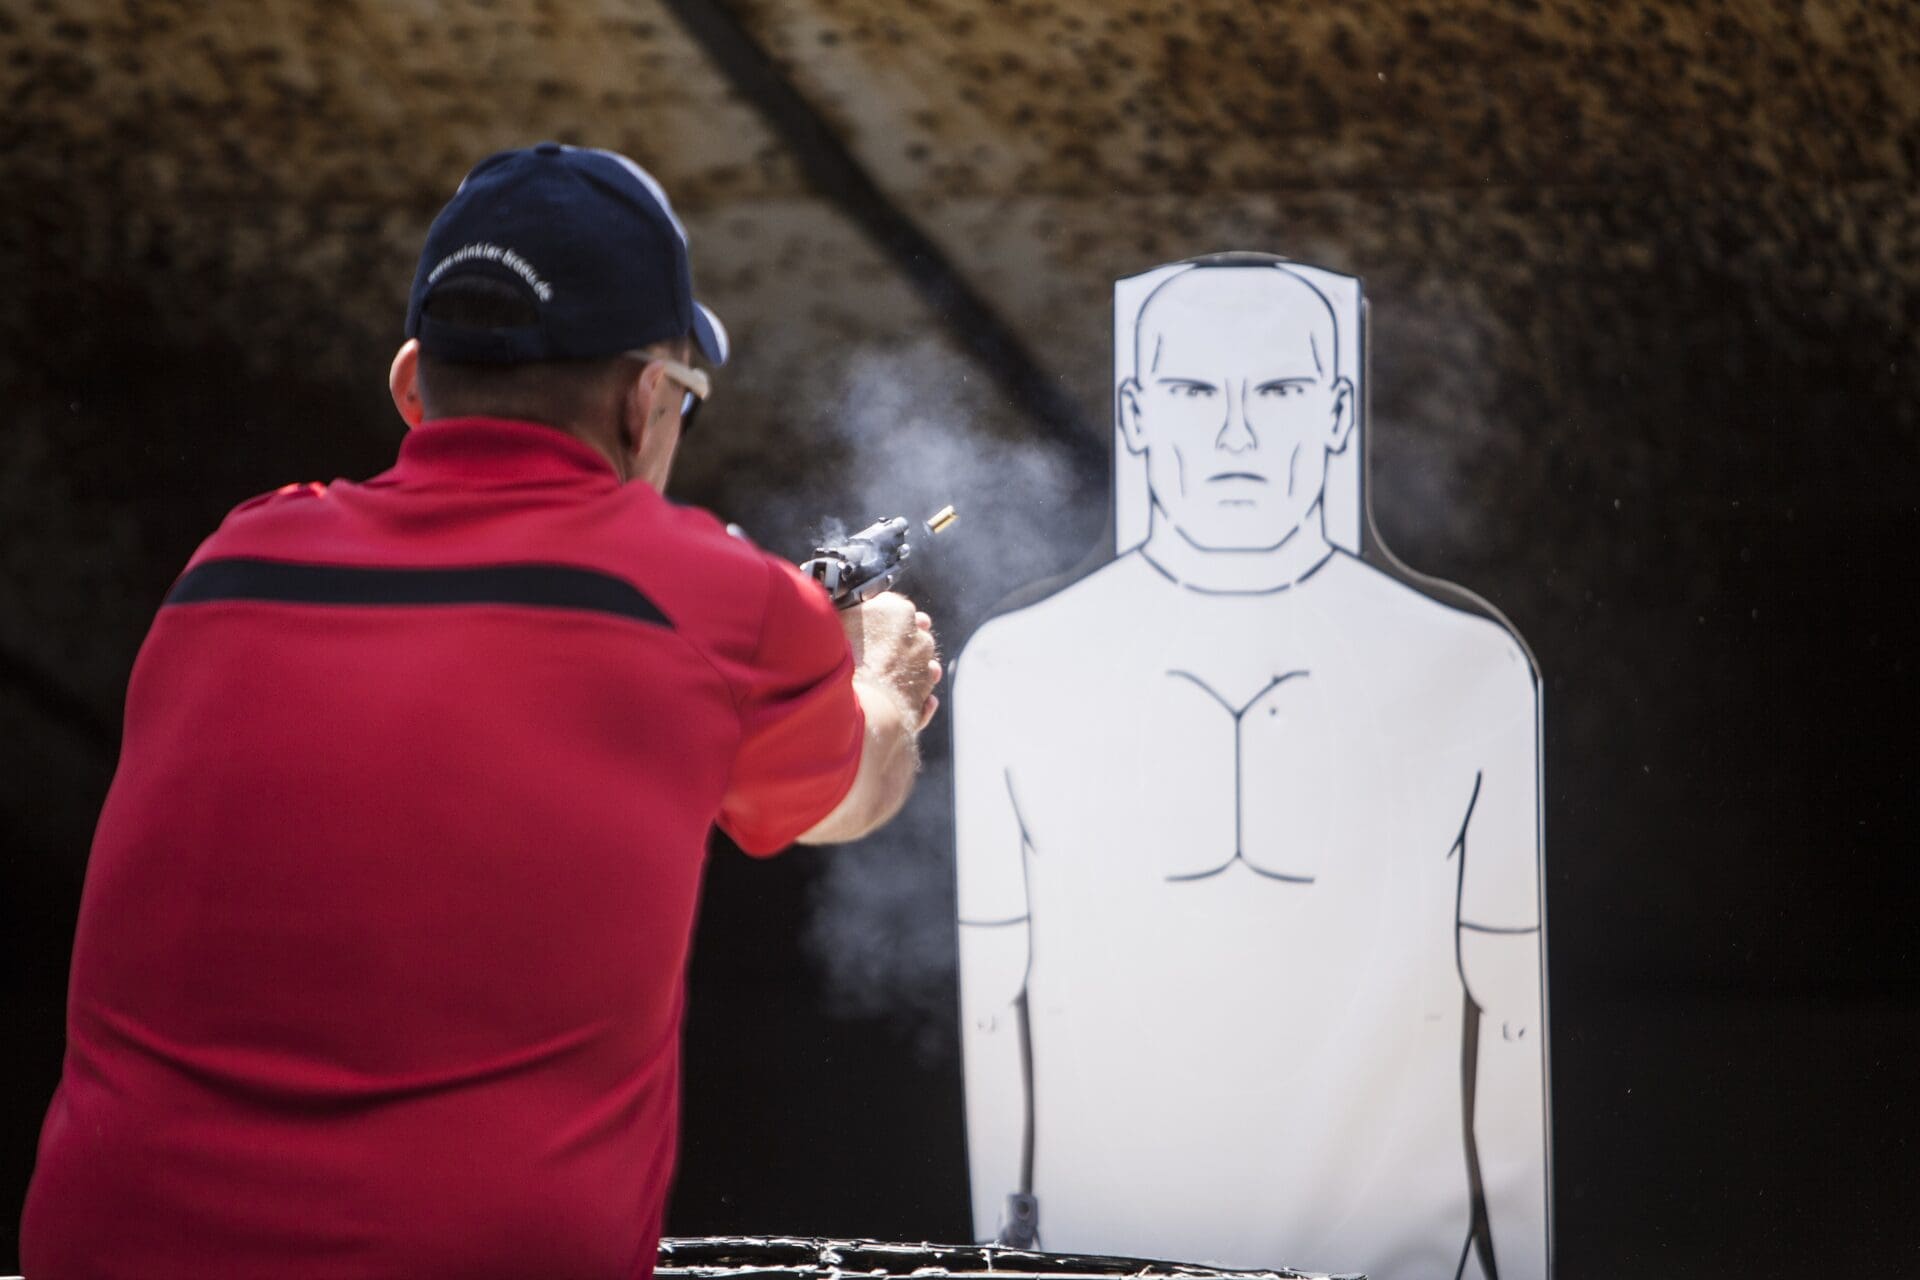 firearms pistol training personal defense